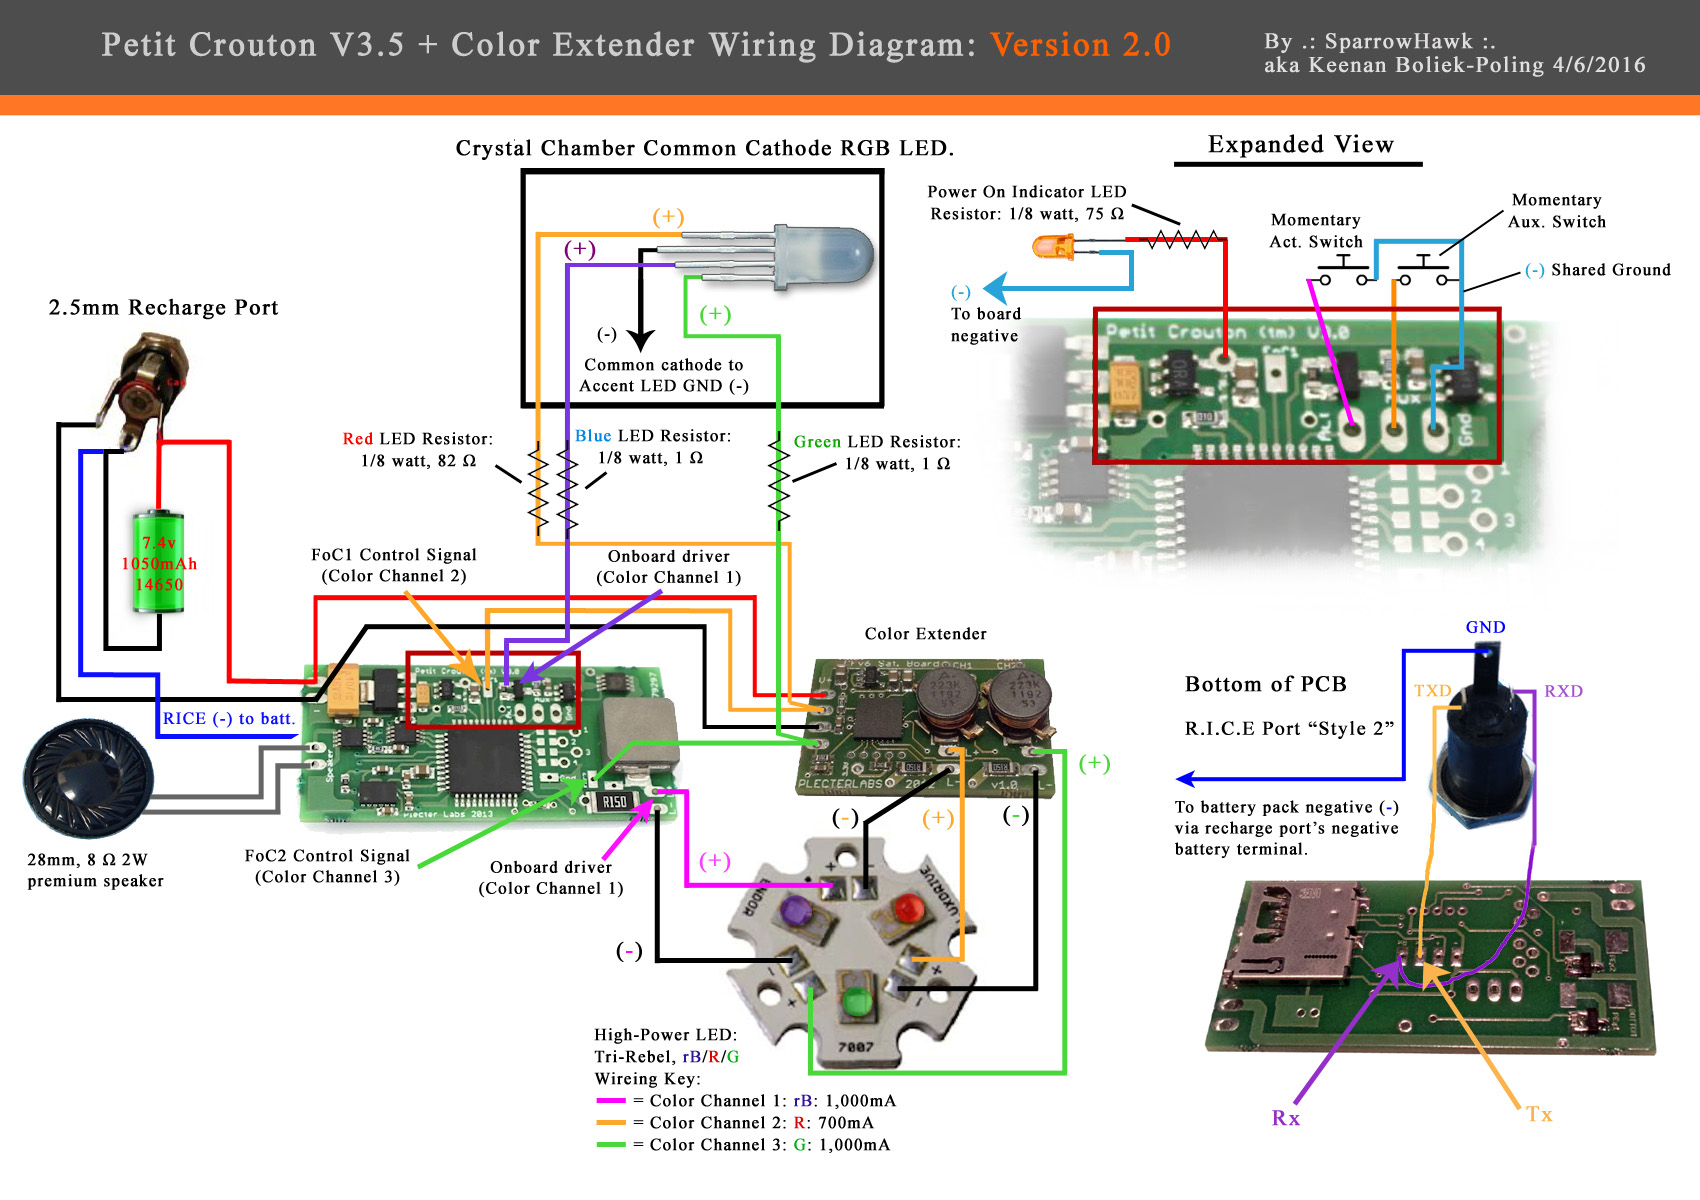 Wiring Diagram For The Petit Crouton V3.5/4.0 + Color Extender - Nano Biscotte V4 Wiring Diagram